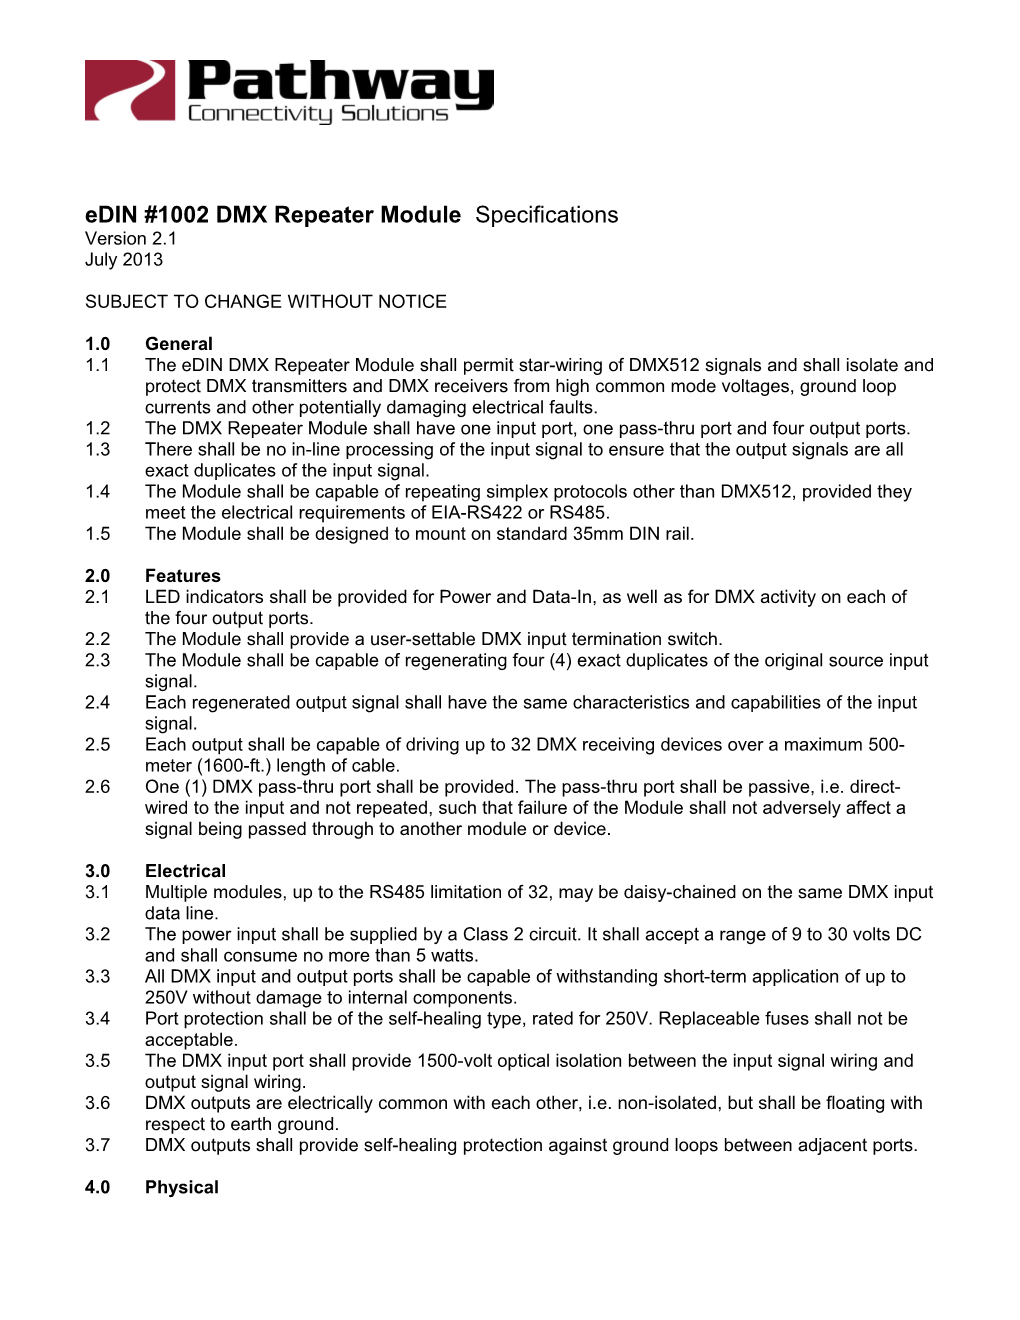 Edin #1002DMX Repeater Module Specifications